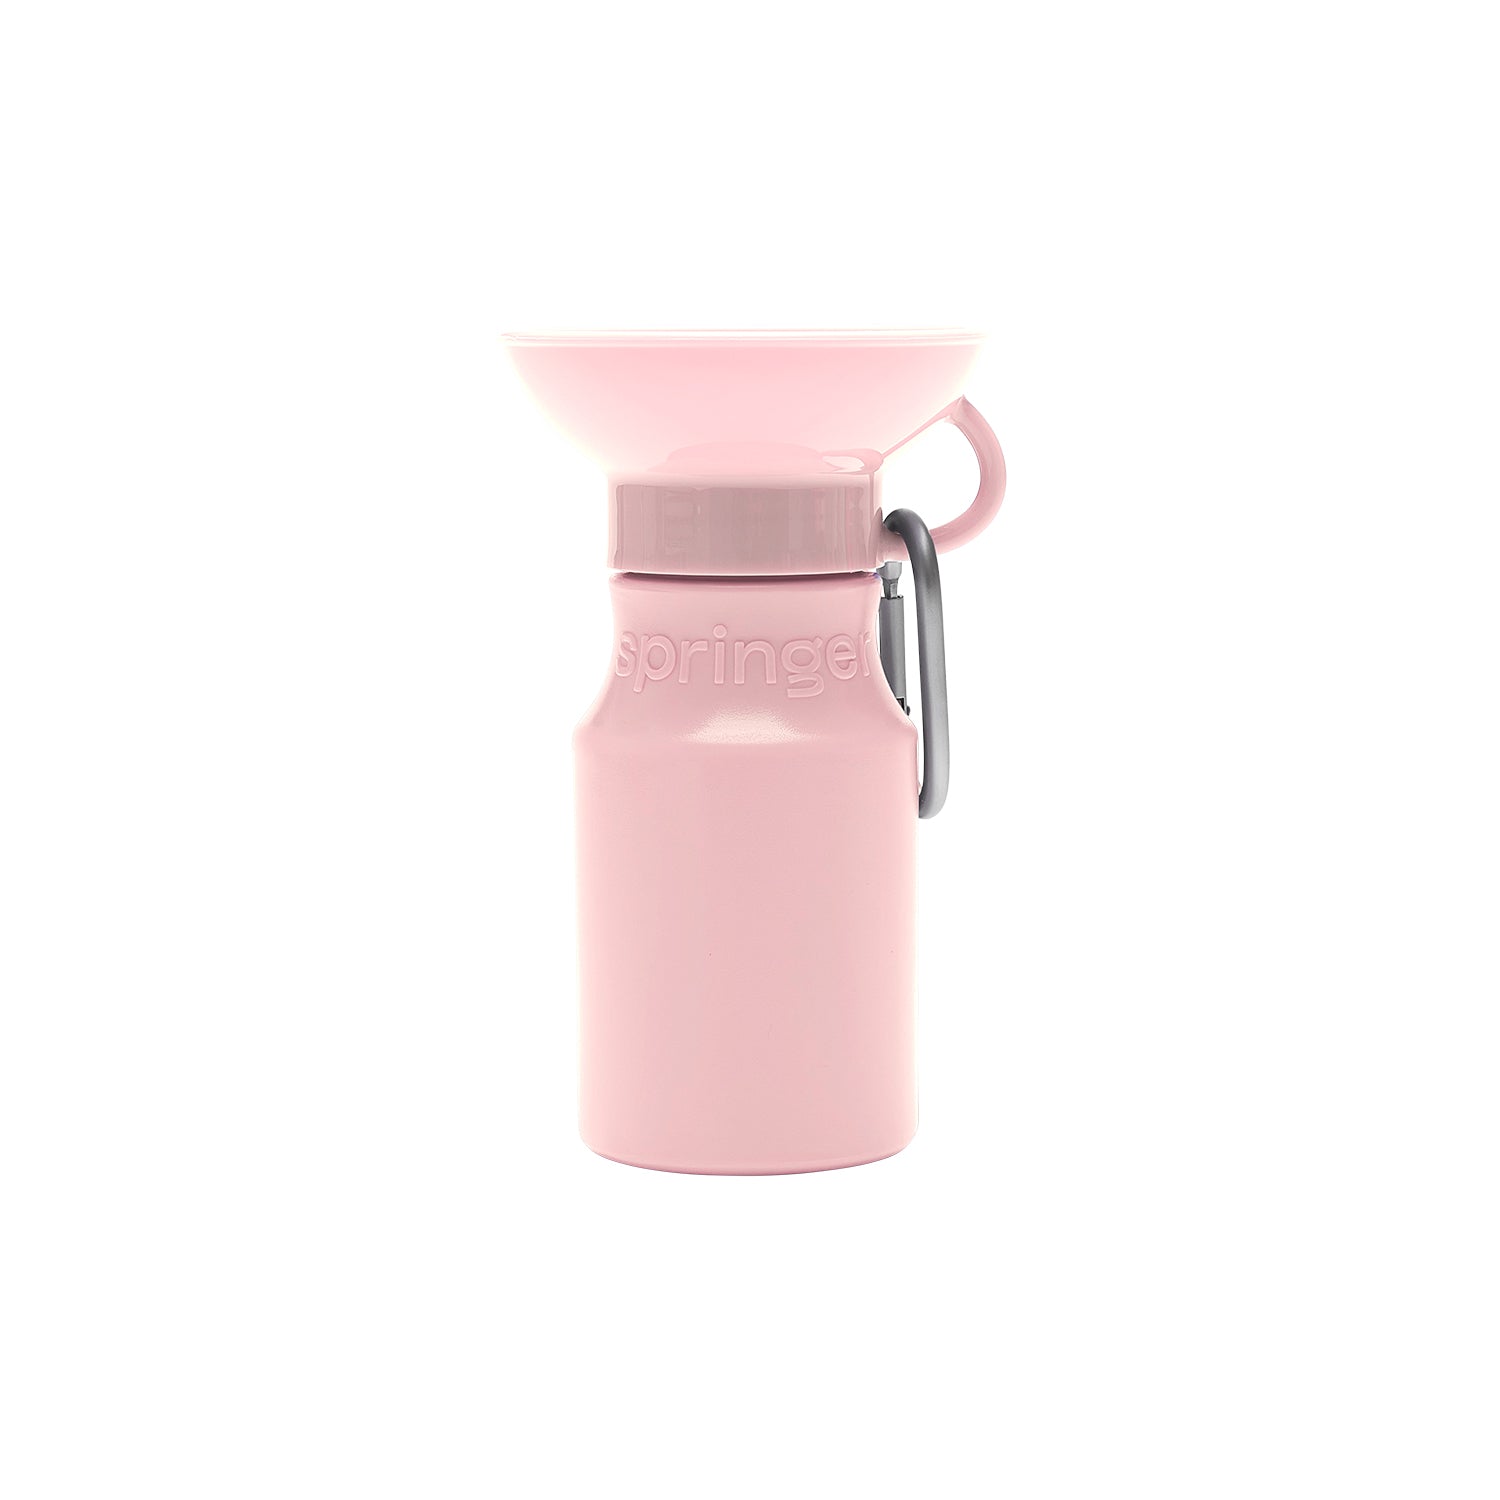 Mini travel bottle in pink